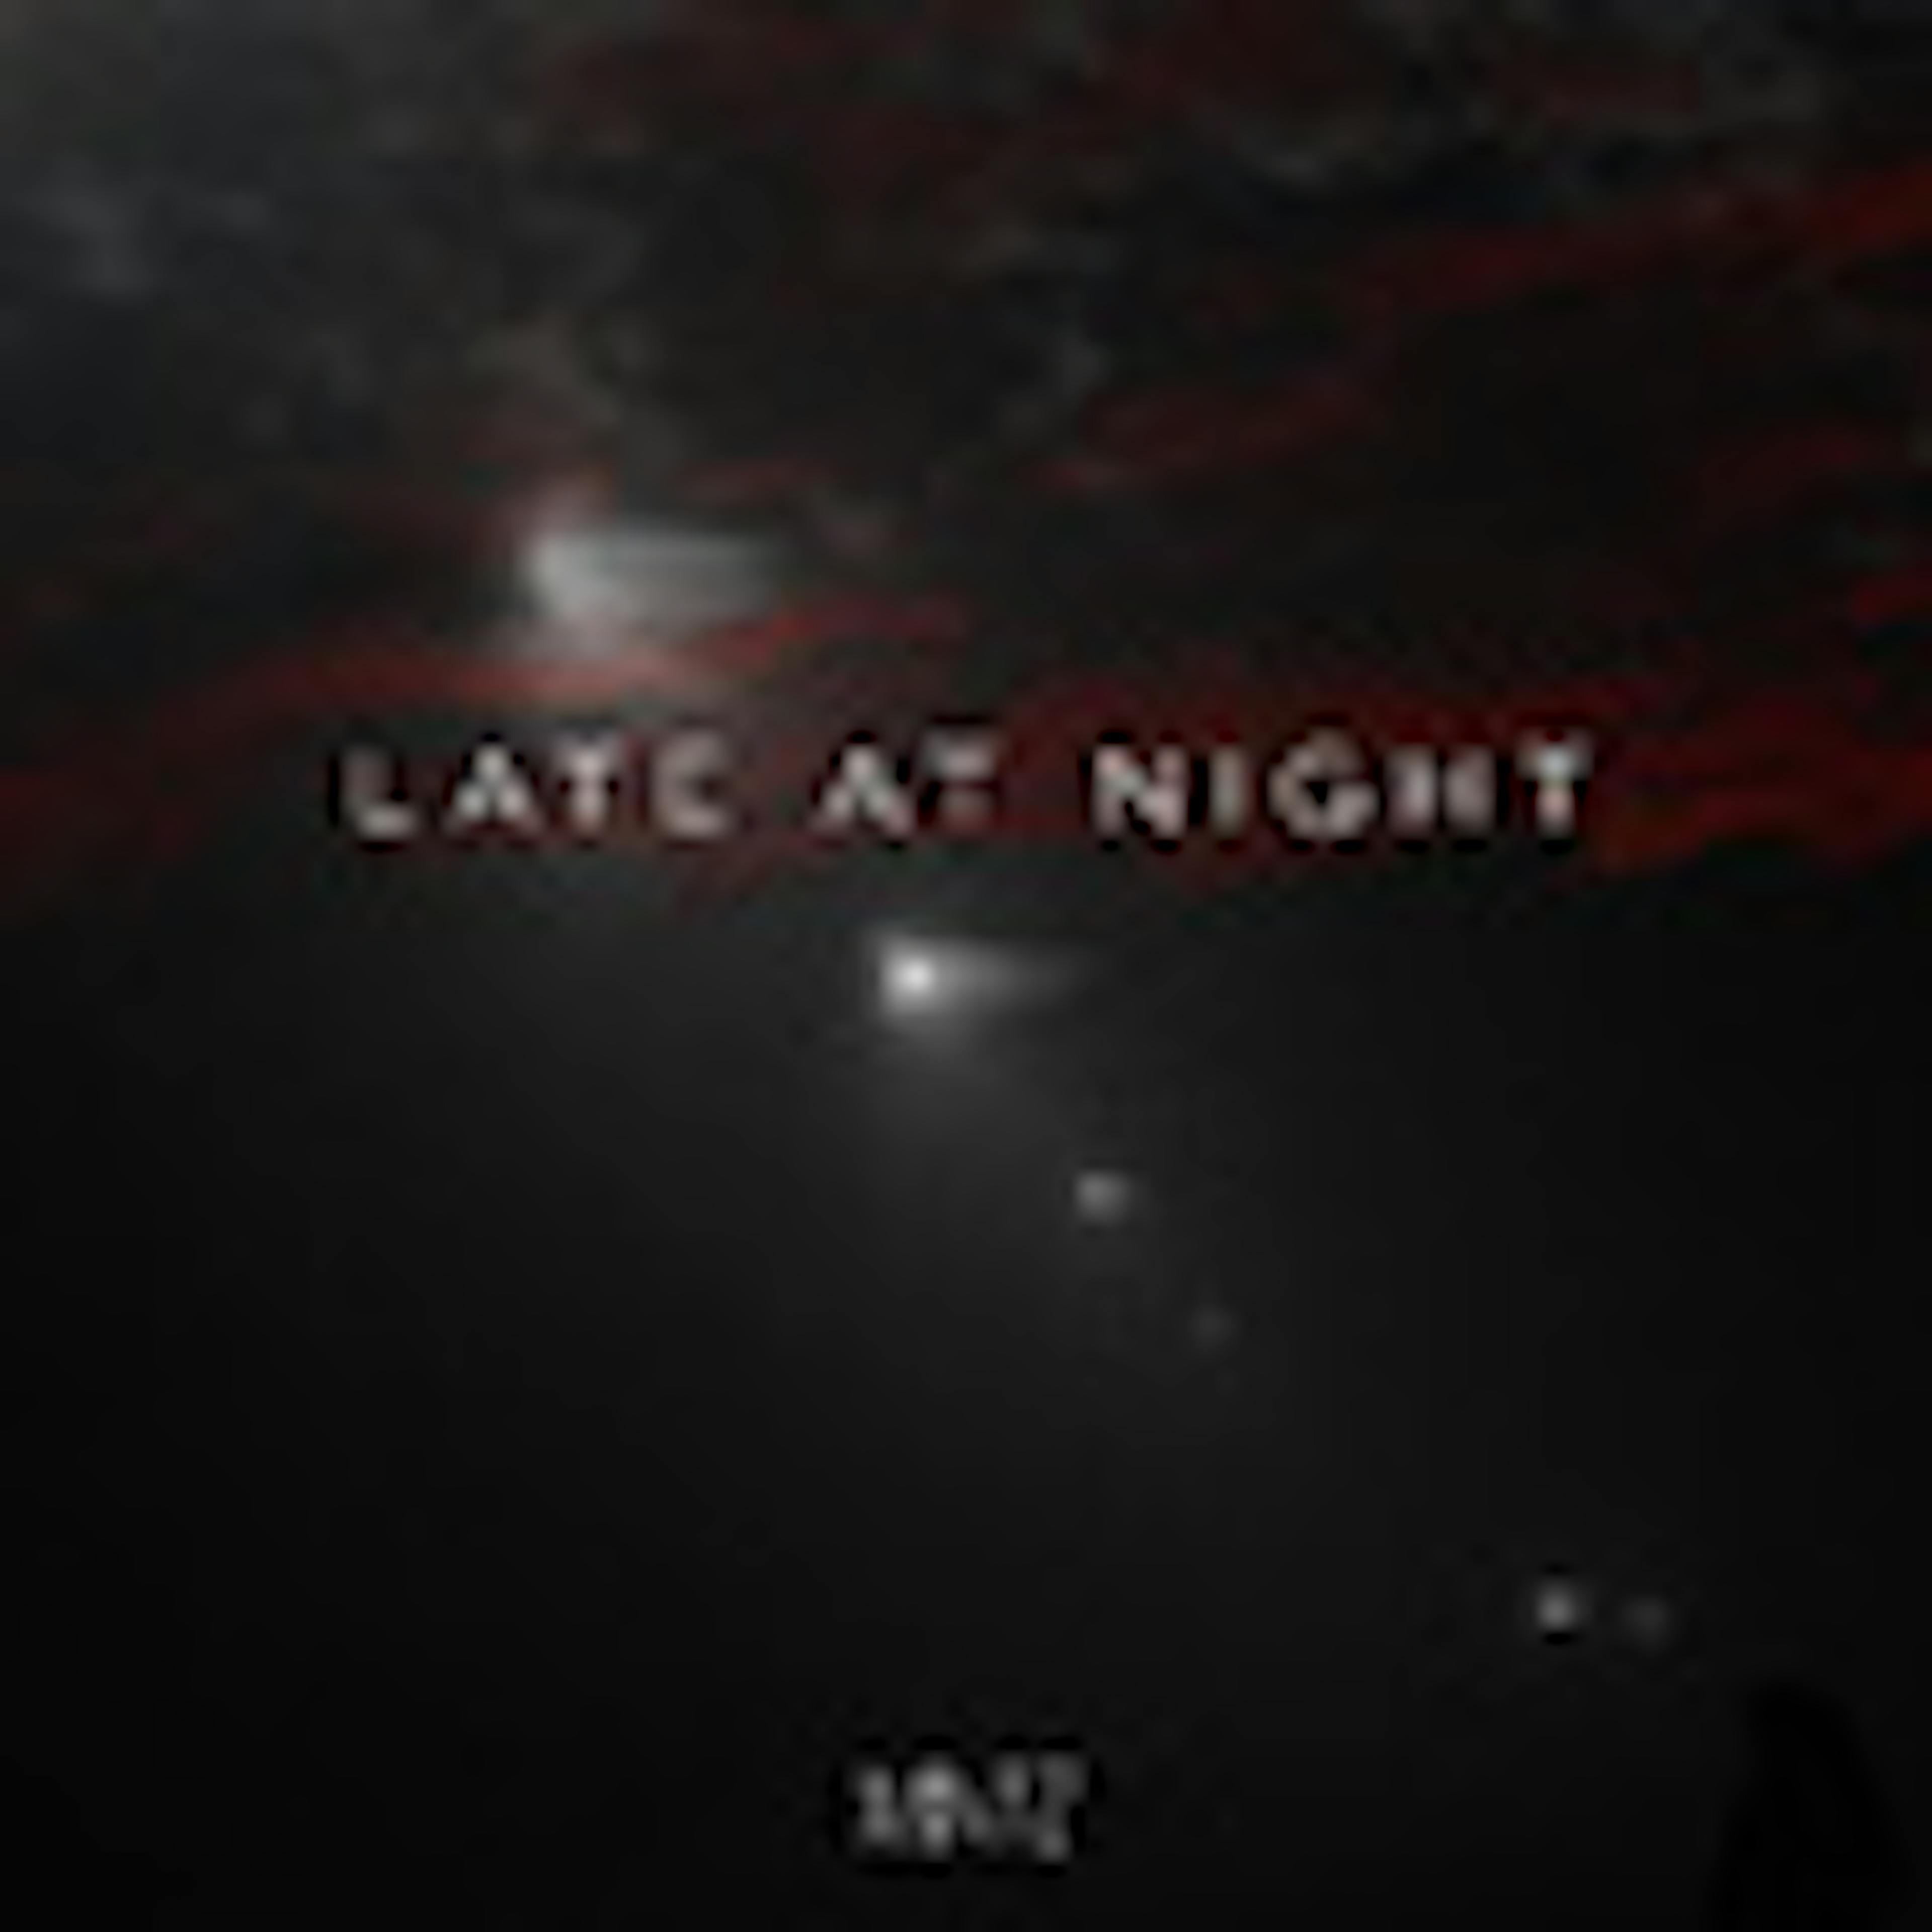 Late at Night album cover